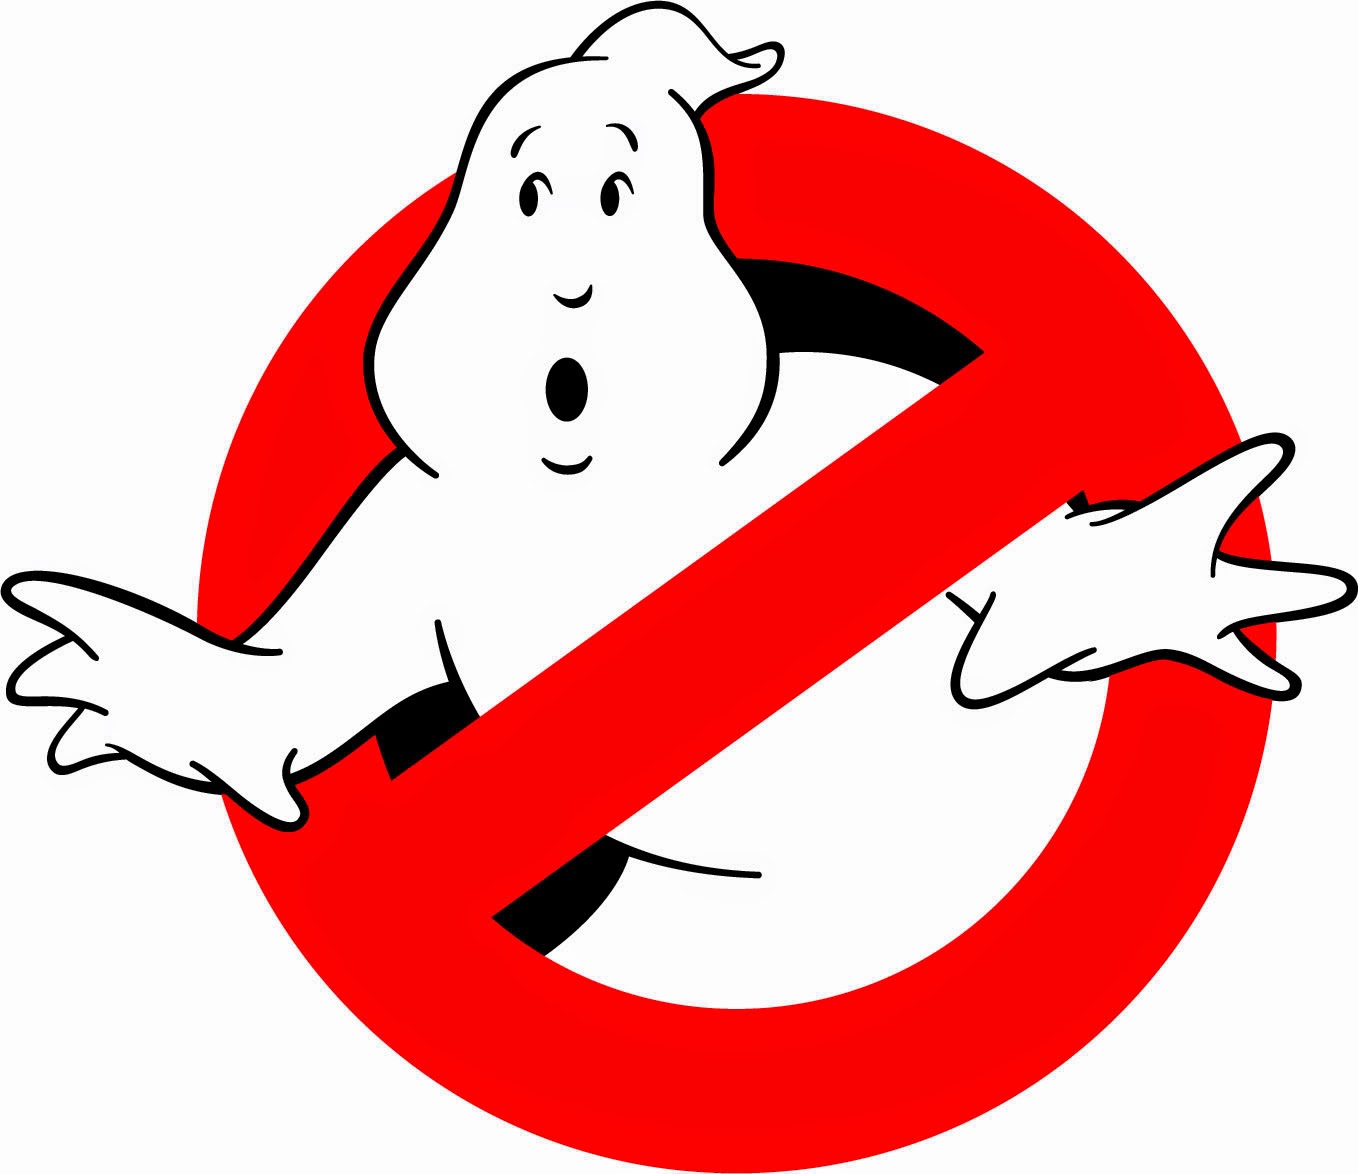 ghostbusters-logo-mundodojoey